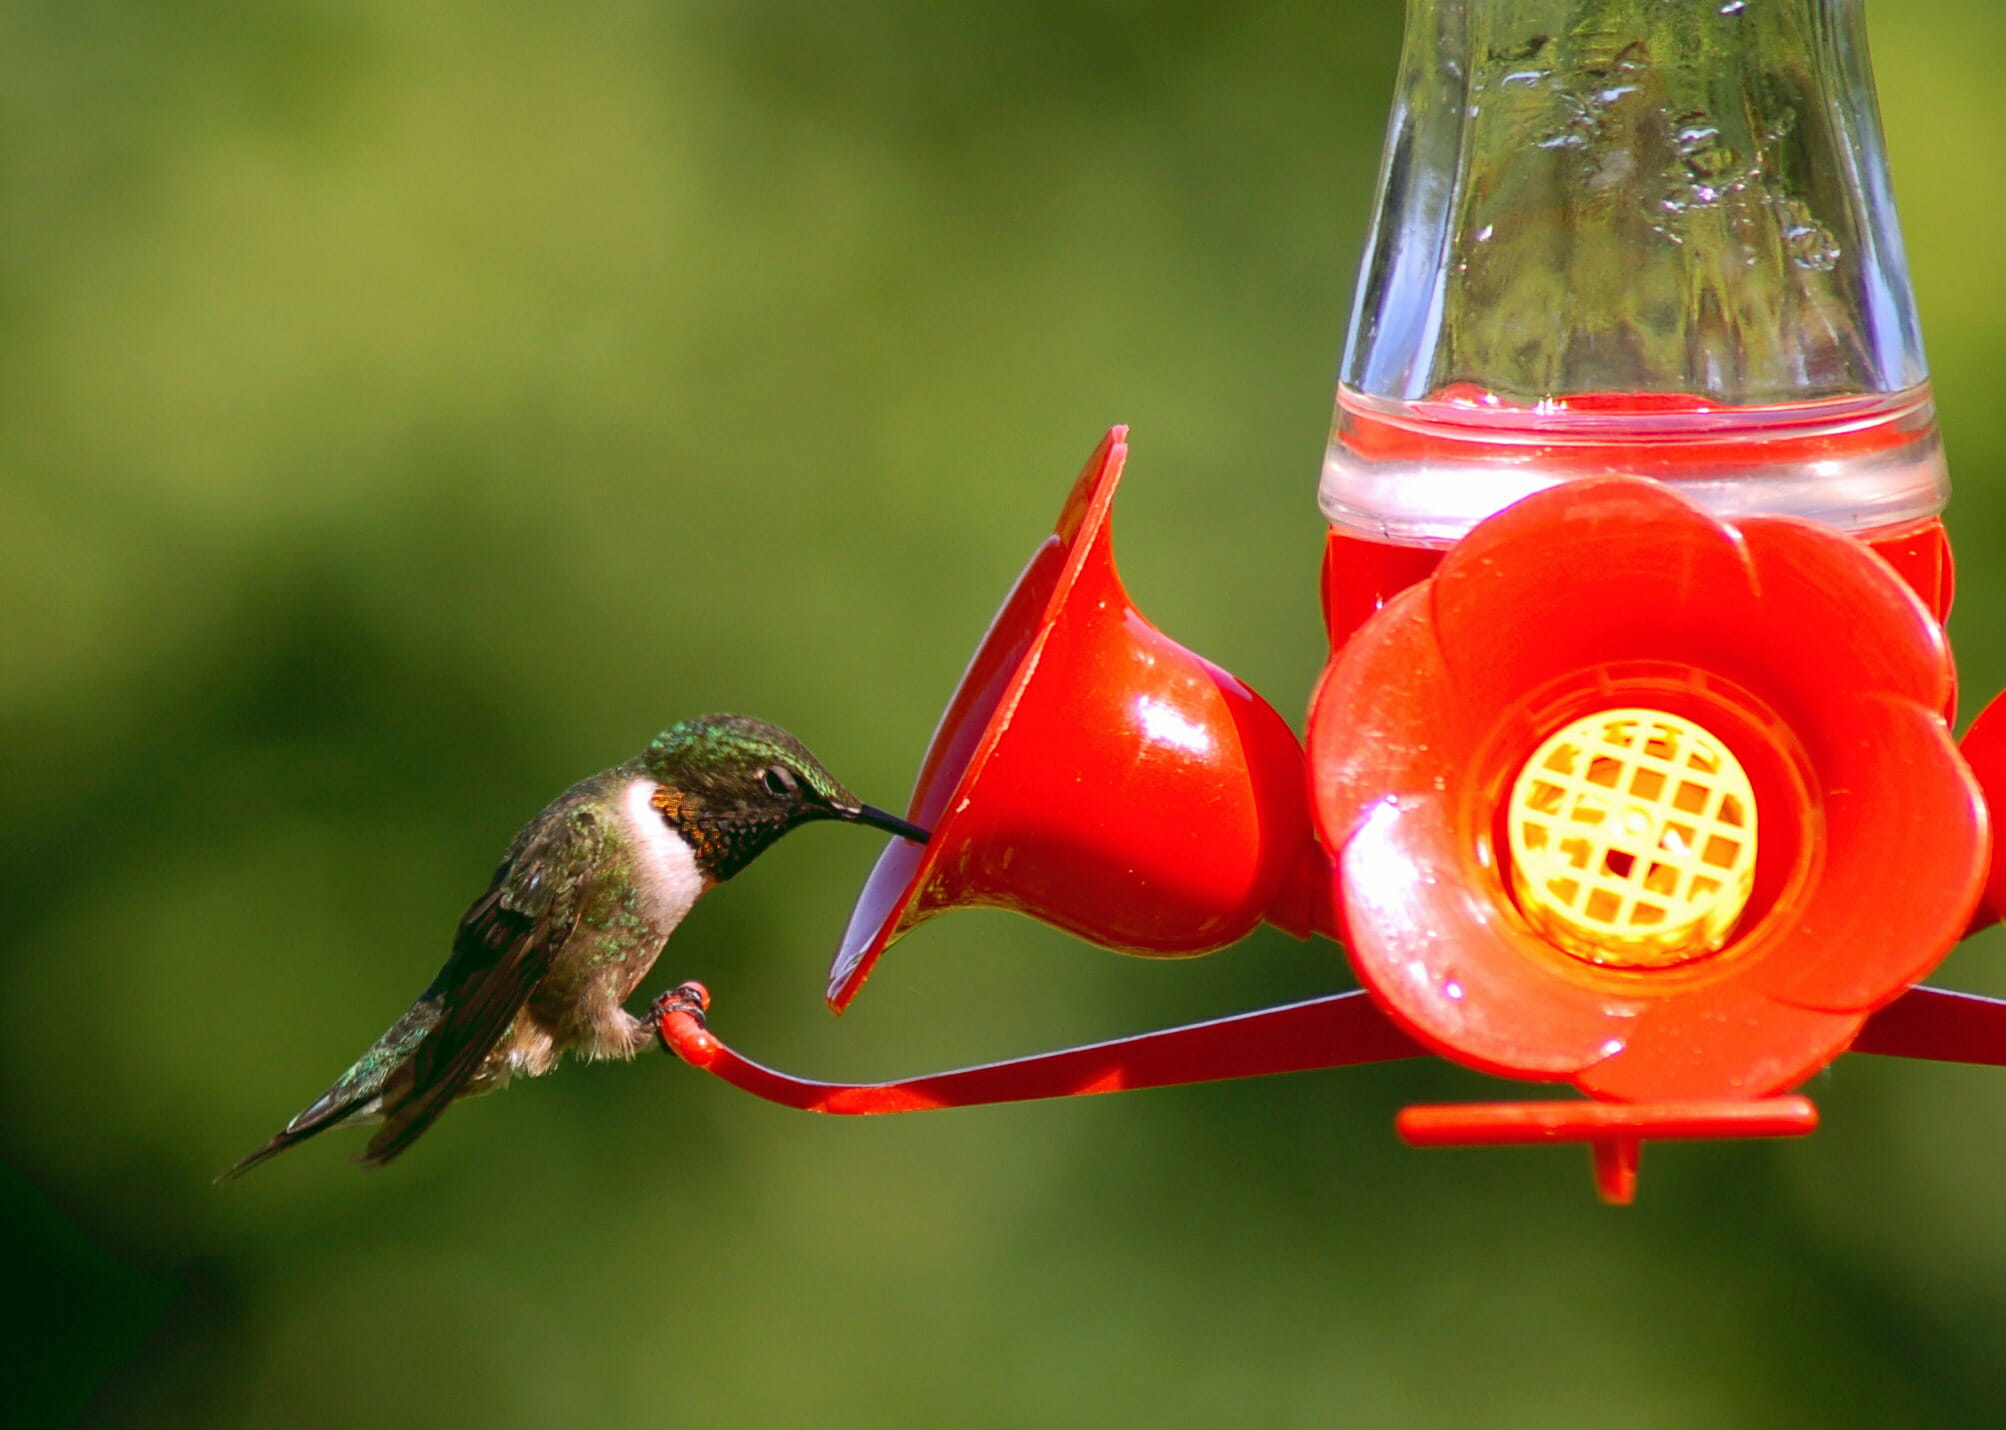 More Birds Hummingbird Feeder with 5 Feeding Stations Jersey Cow Milk Bottle-St 